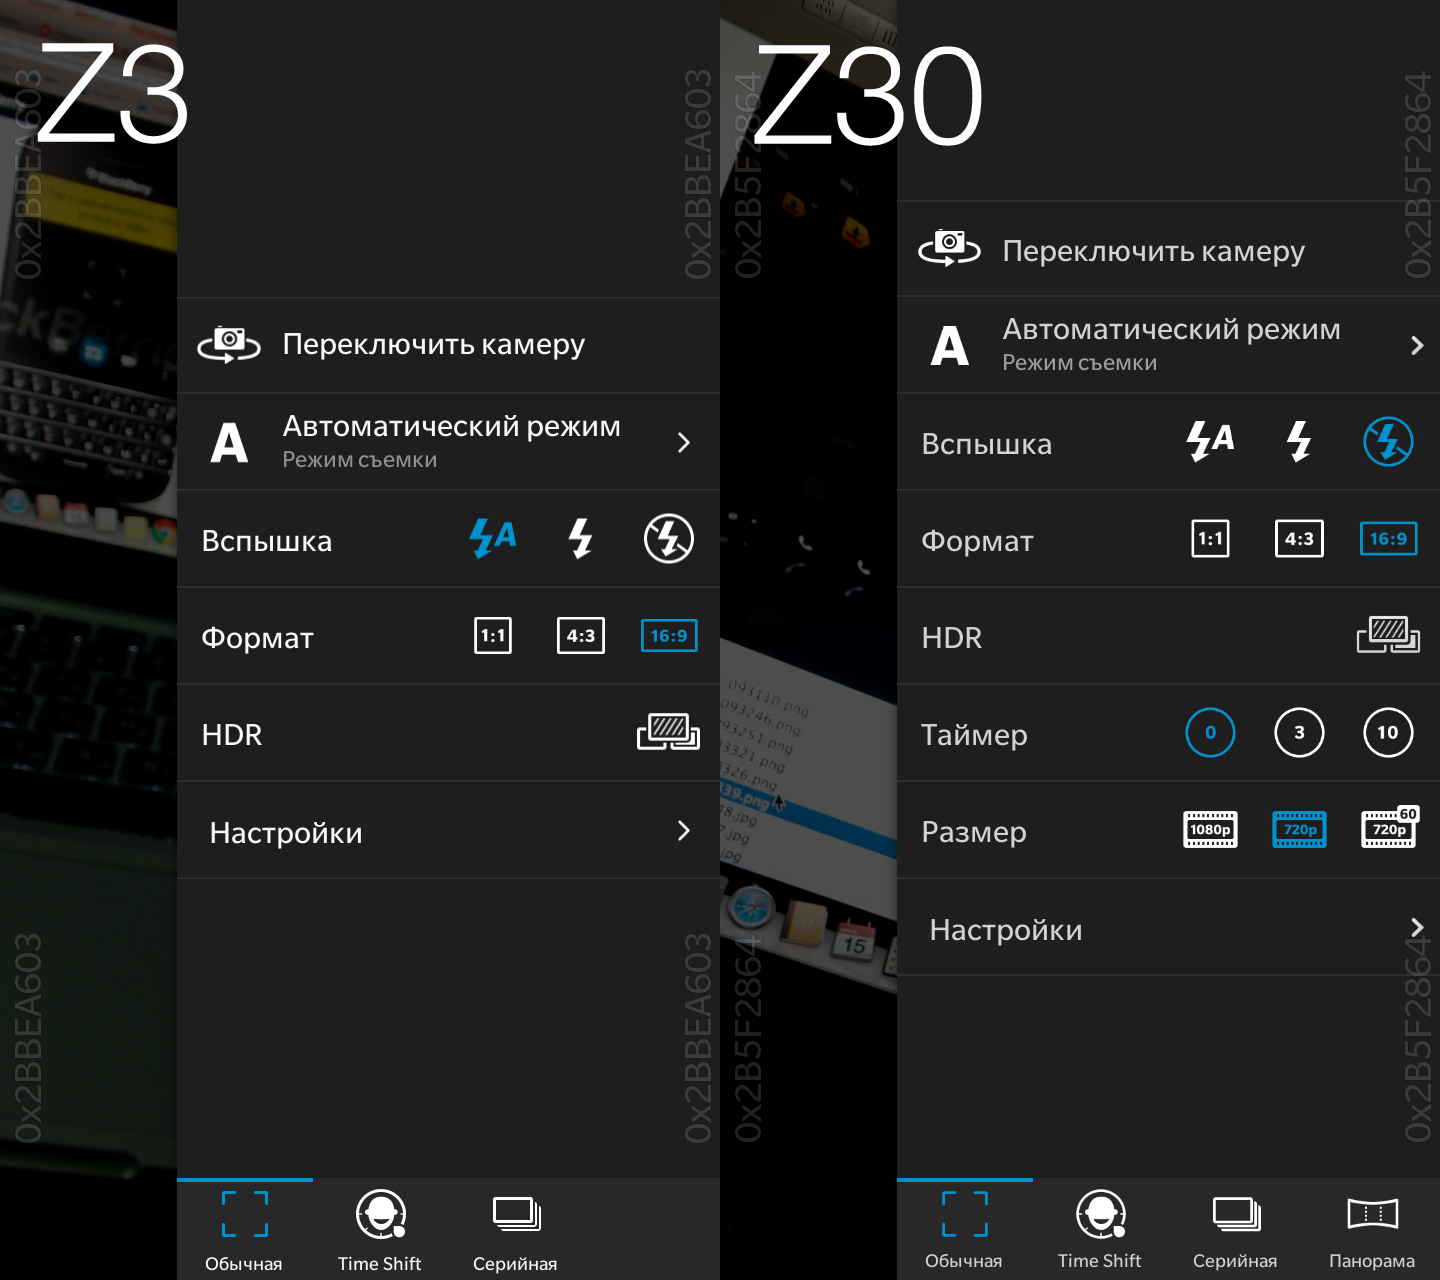 BlackBerry-Z3-Z30-camera-UI